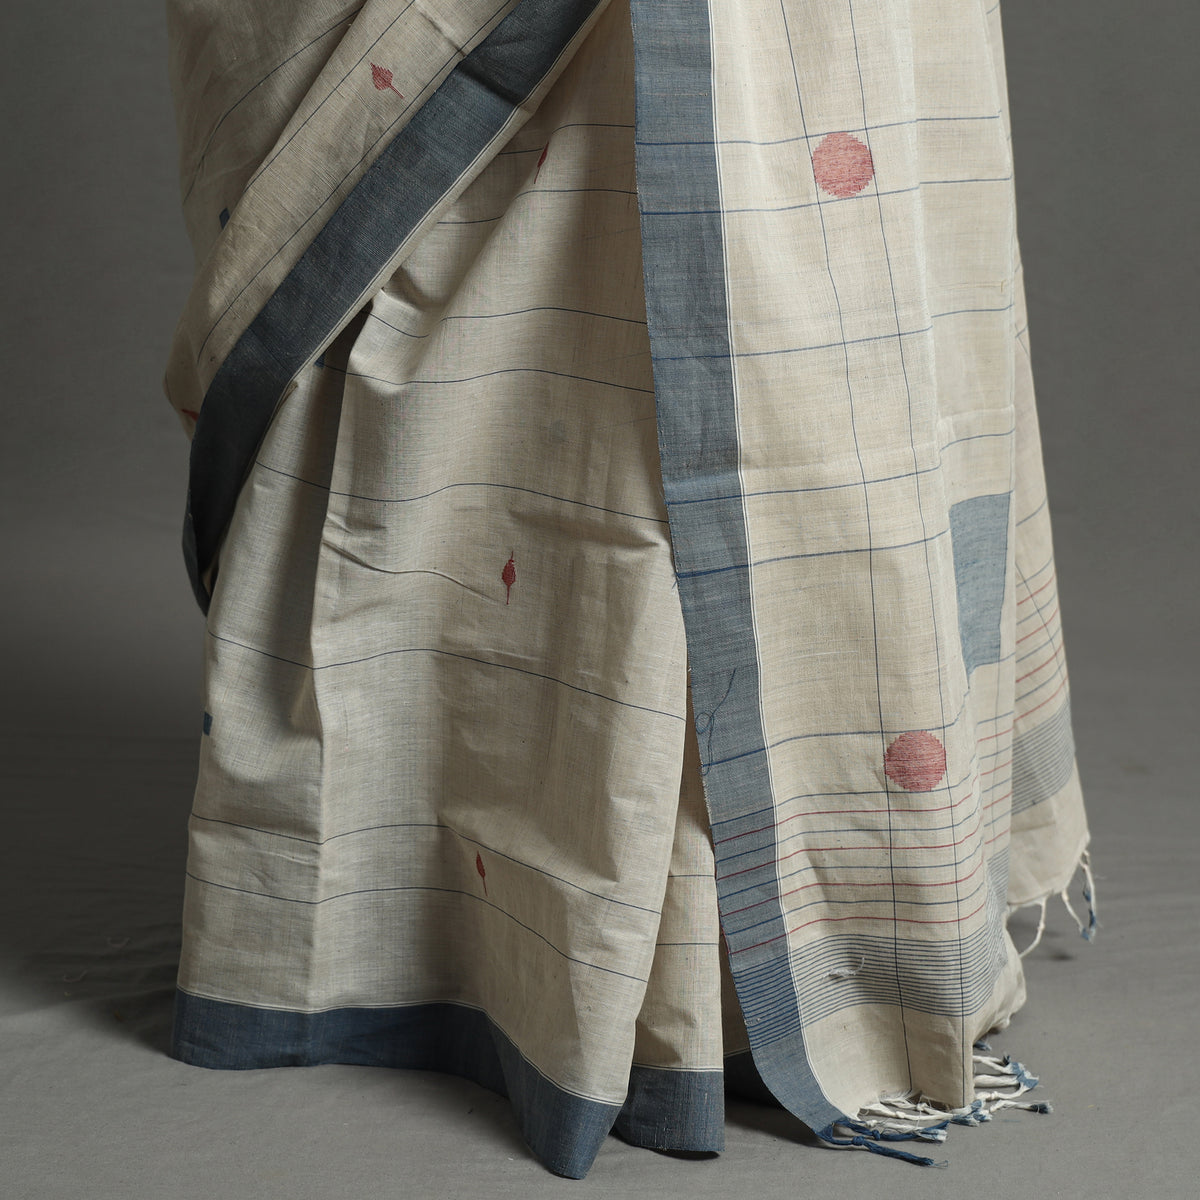 White - Srikakulam Jamdani Handspun Handloom Cotton Saree 29